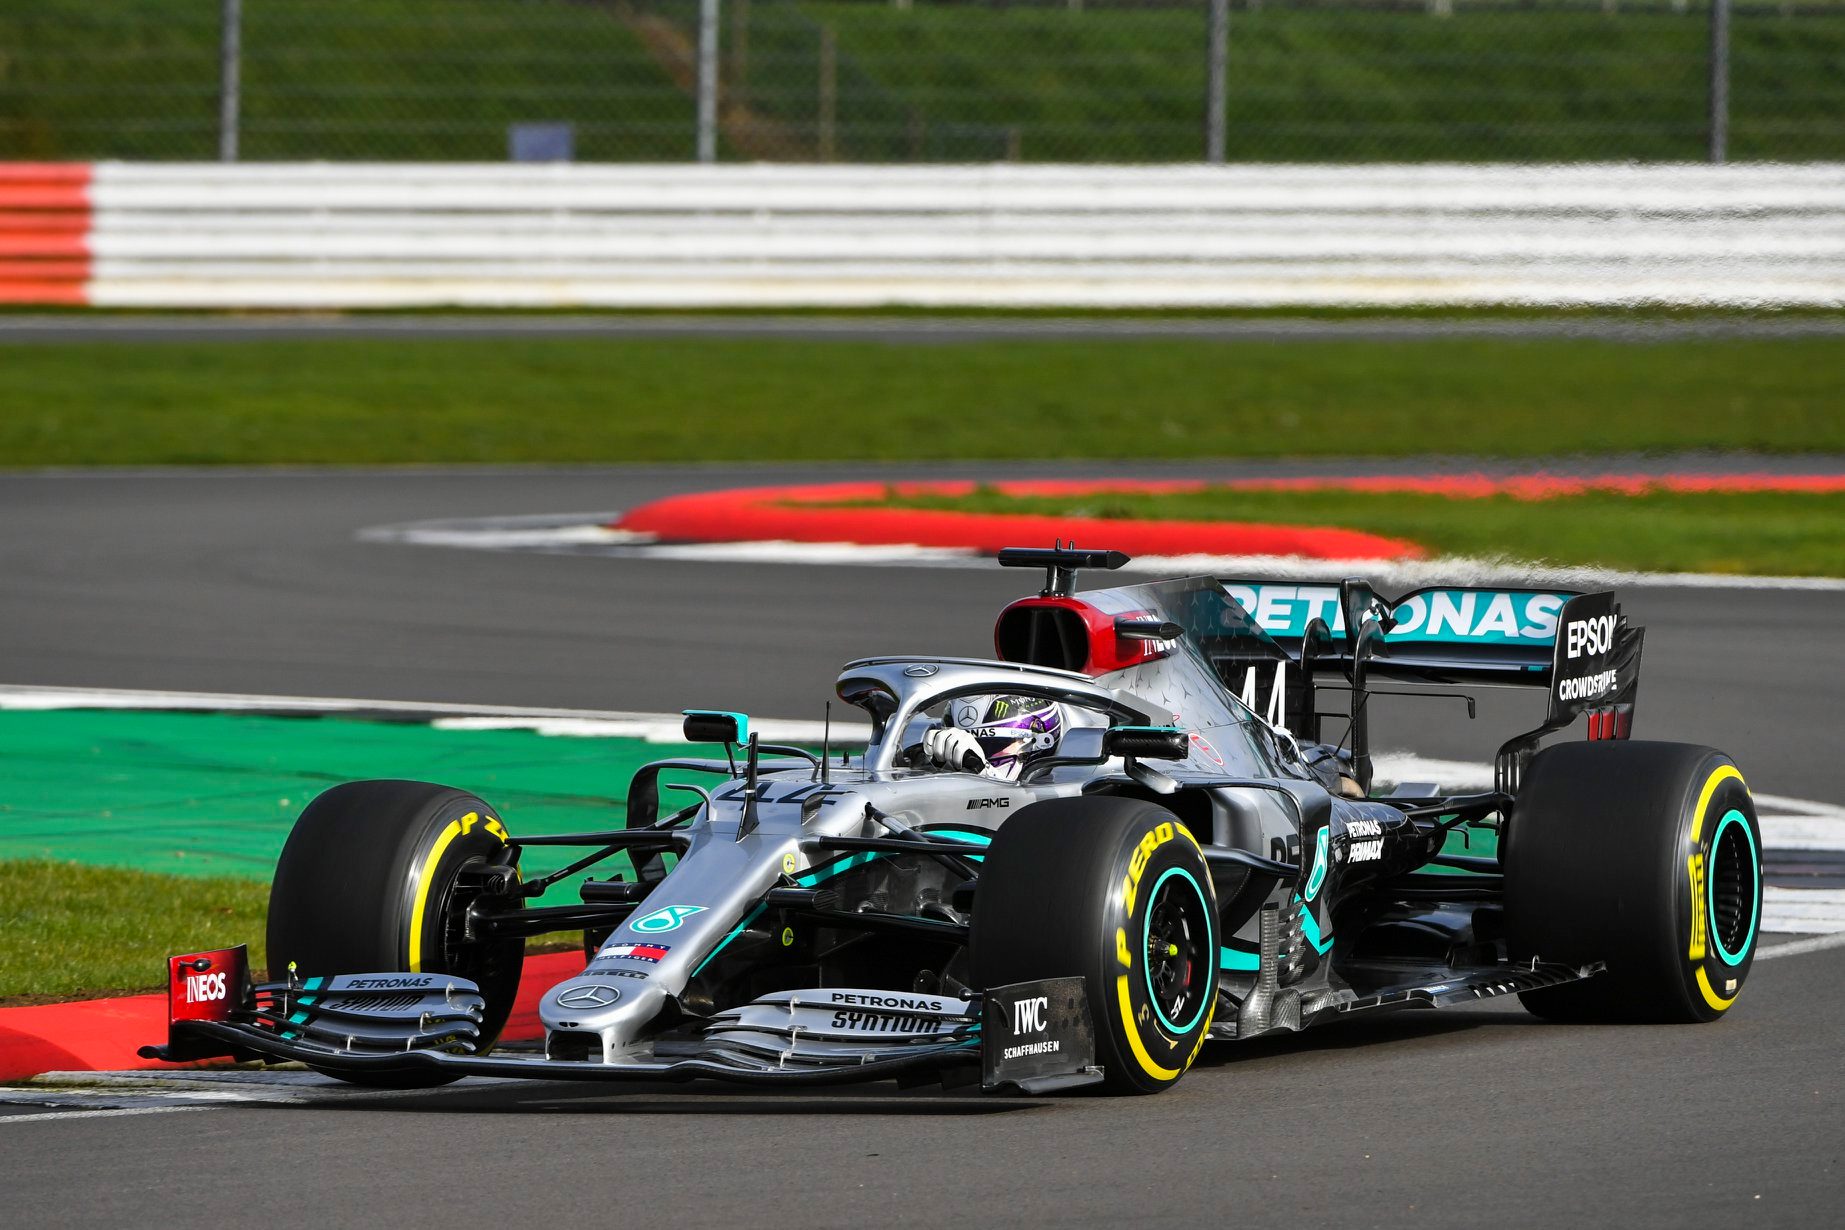 Mercedes Amg Petronas Formula One Team S Das System Banned For 2021